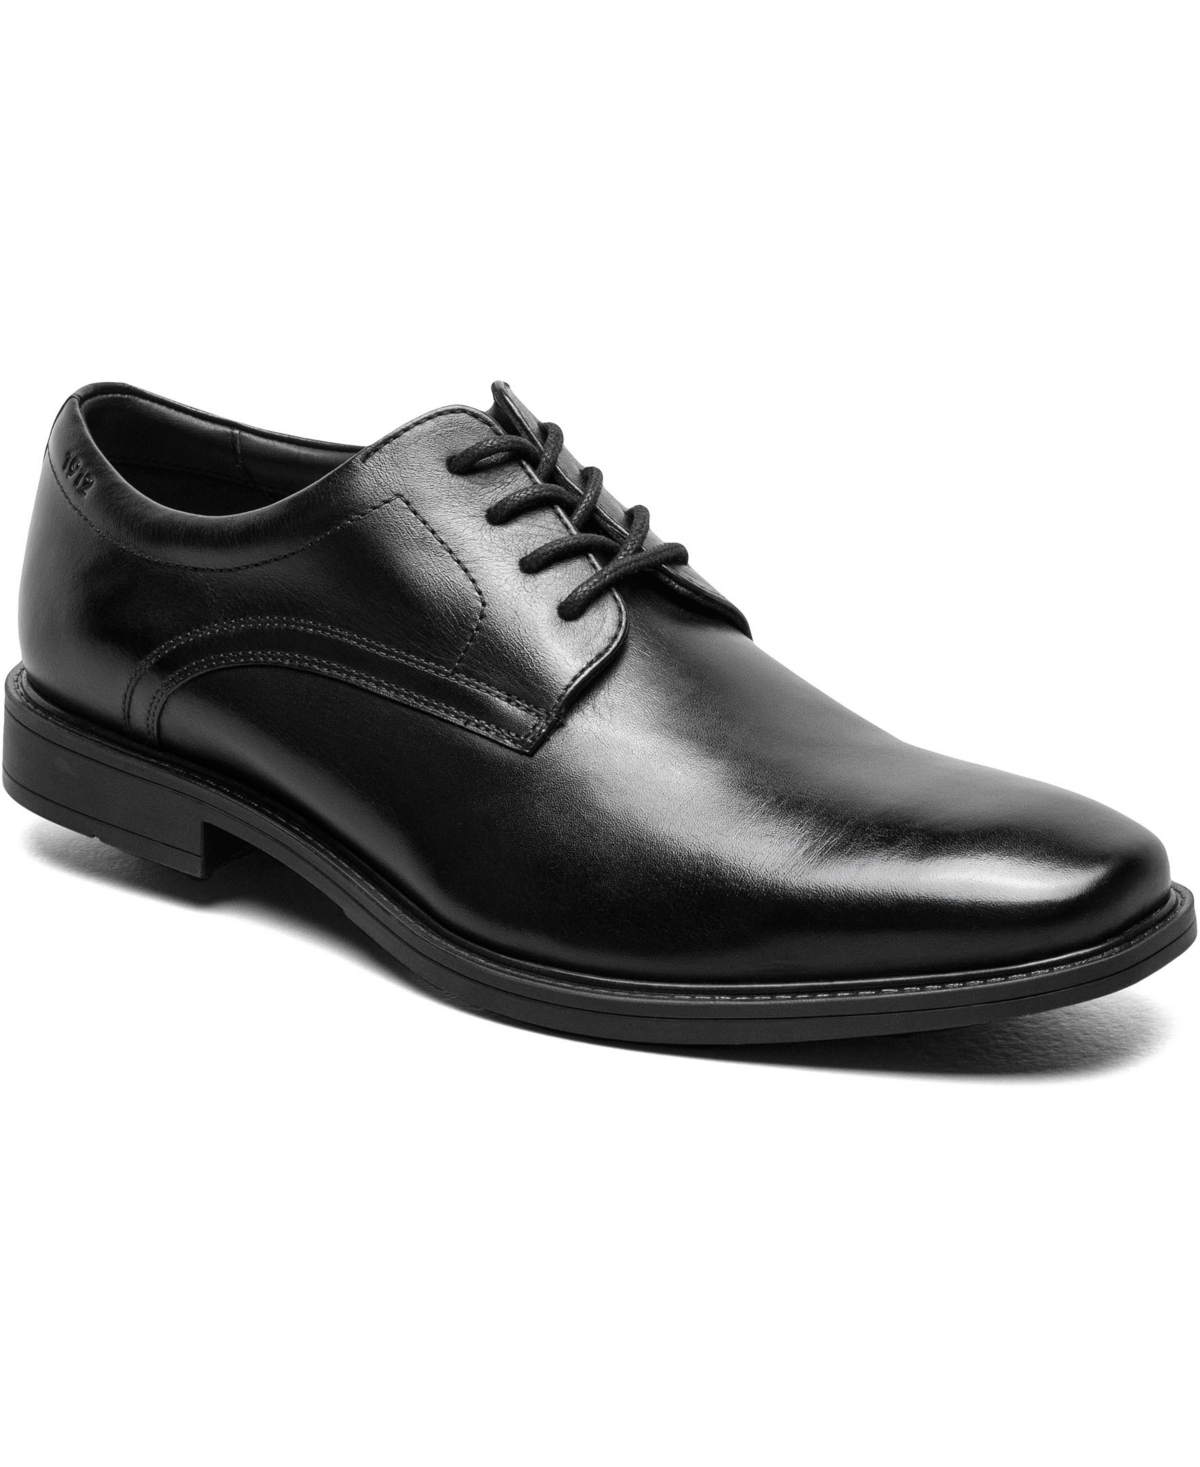 Men's Baxter Leather Plain Toe Oxford - Black